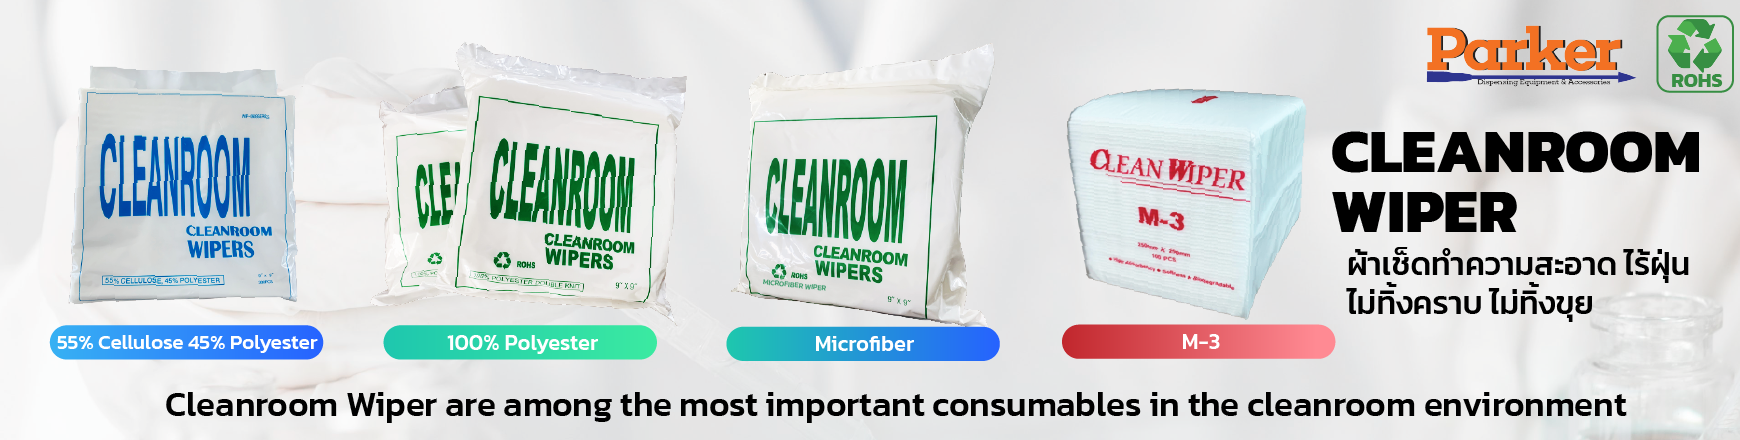 Cleanroom wiper, ผ้าเช็ดทำความสะอาดในห้องคลีนรูม ผ้าไร้ฝุ่น ผ้าไมโครไฟเบอร์